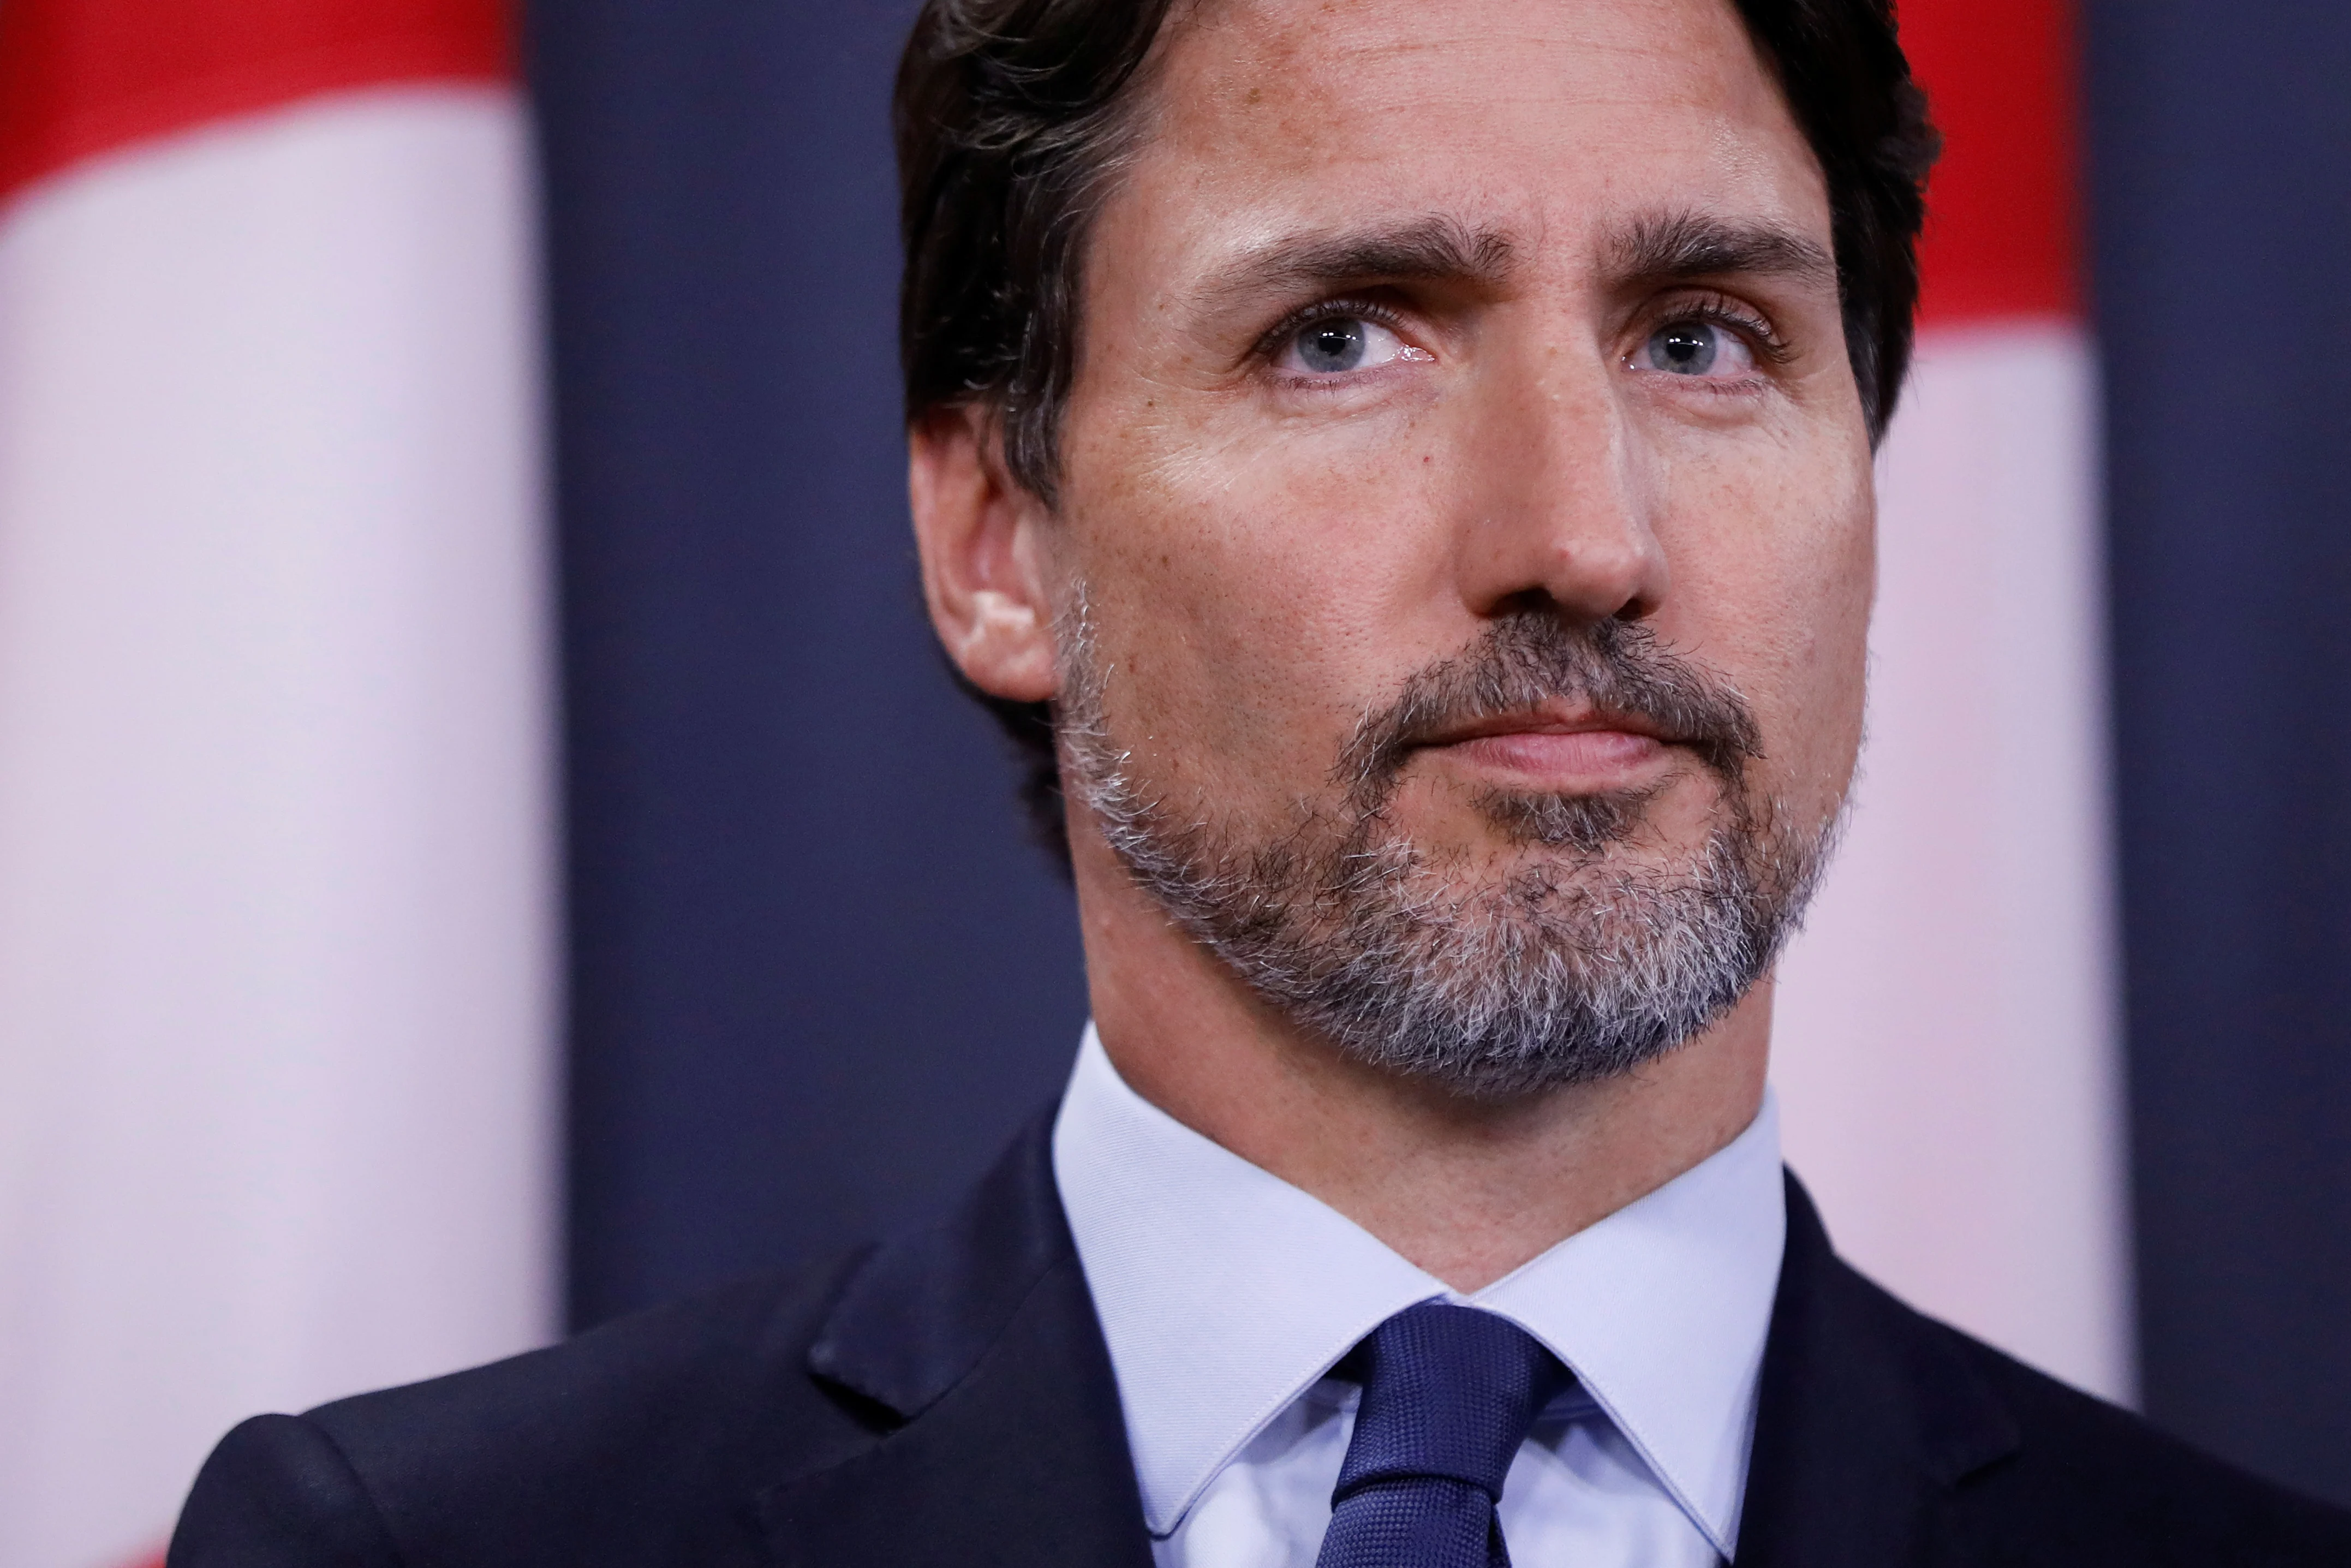 Canada's Pm Trudeau Attends A News Conference In Ottawa